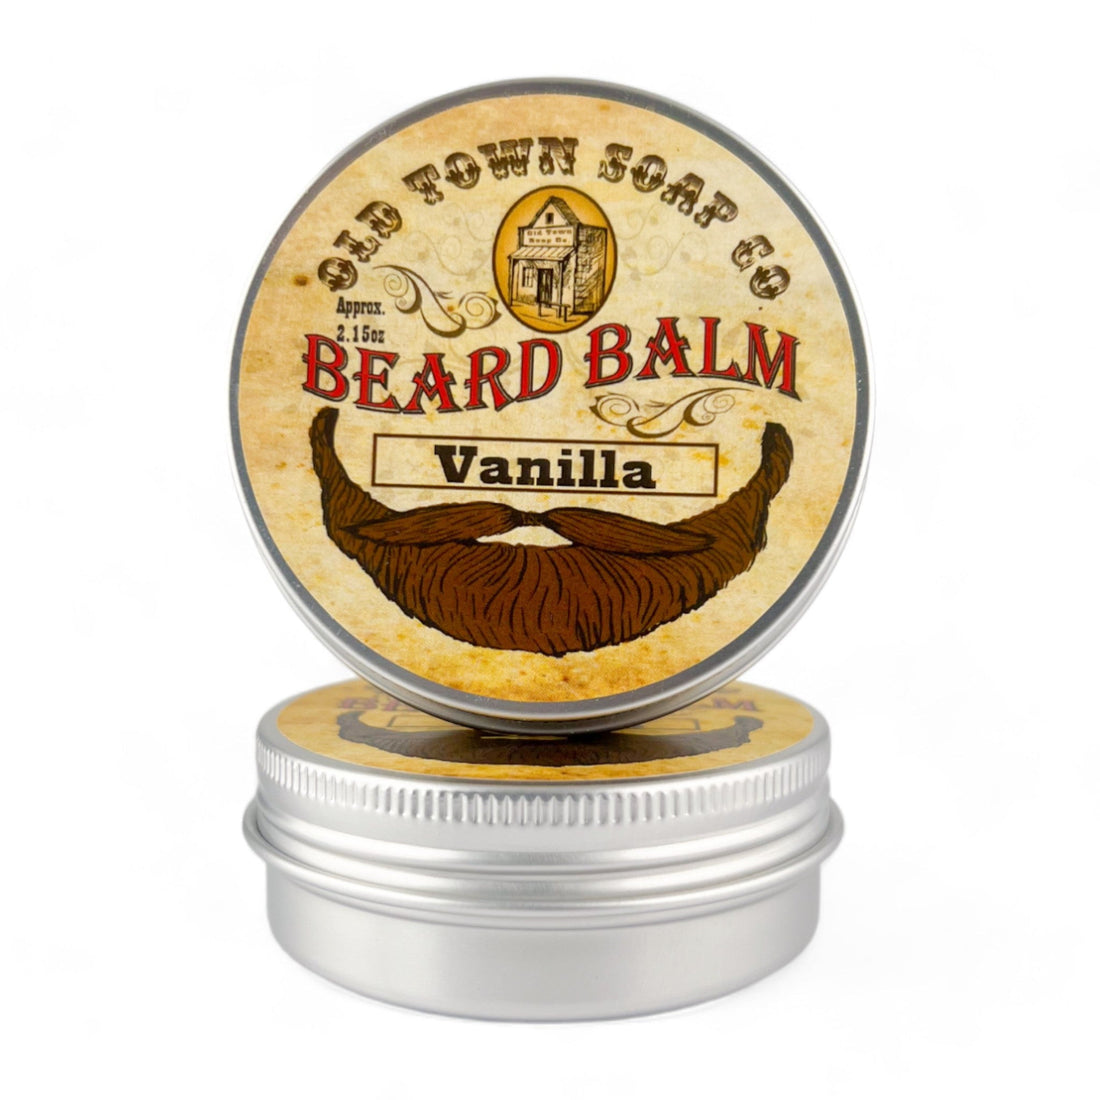 Vanilla Beard Balm - Old Town Soap Co.